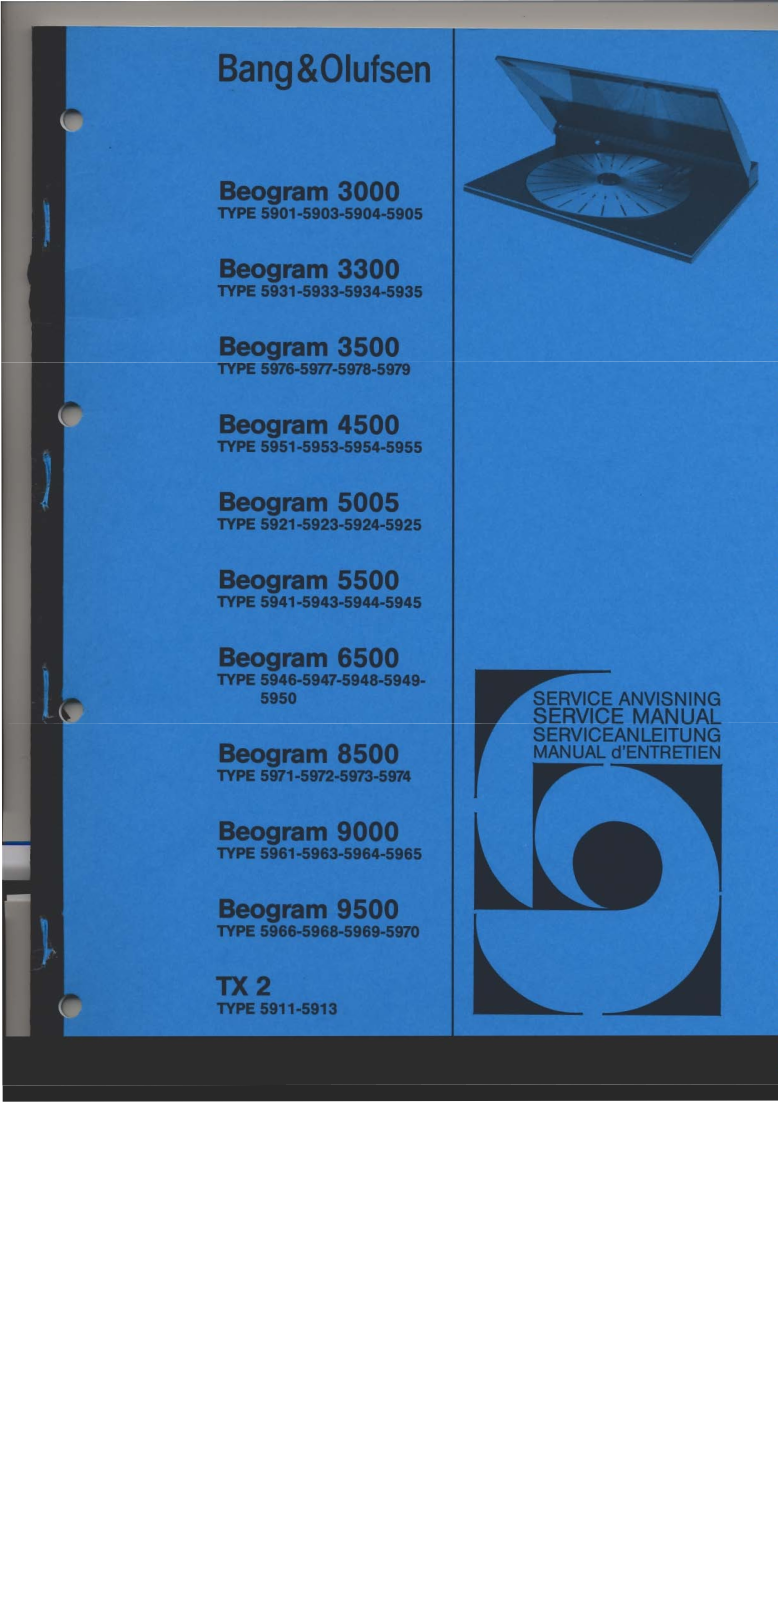 Bang Olufsen Beogram 9500, Beogram 9000, Beogram 8500, Beogram 6500, Beogram 5500 Service Manual